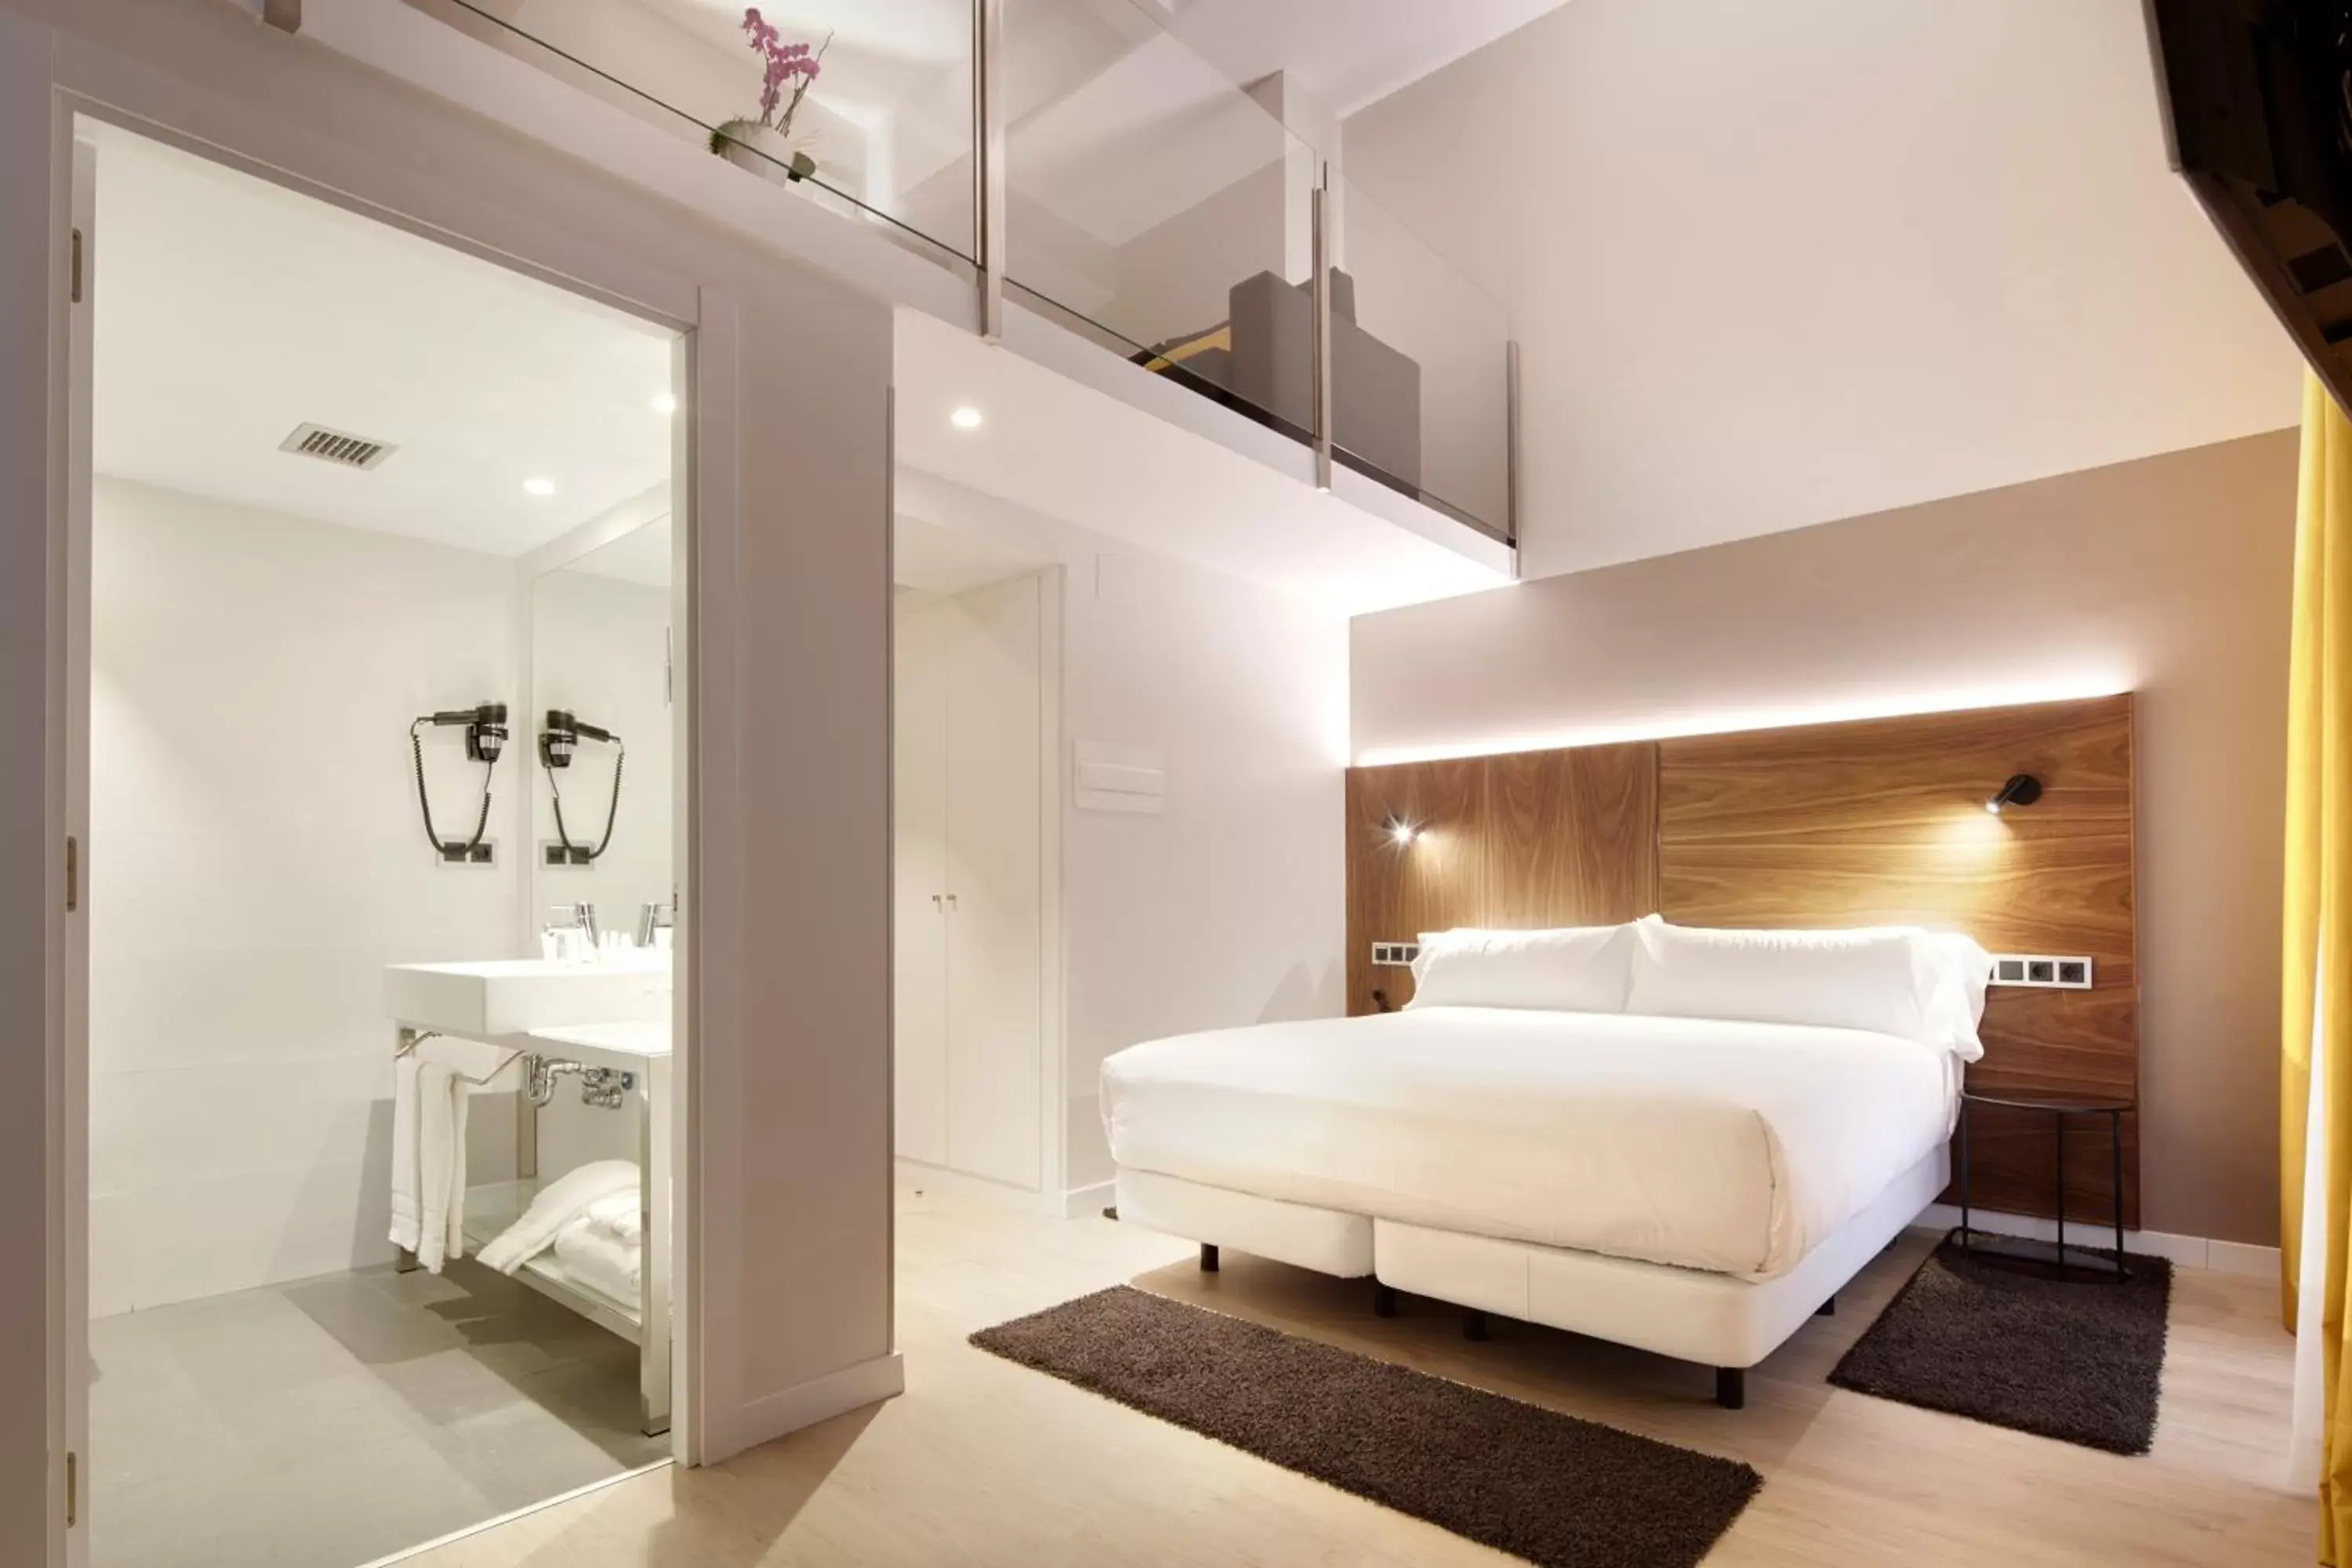 Photo of the whole room, Bathroom in Hotel Arrizul Congress